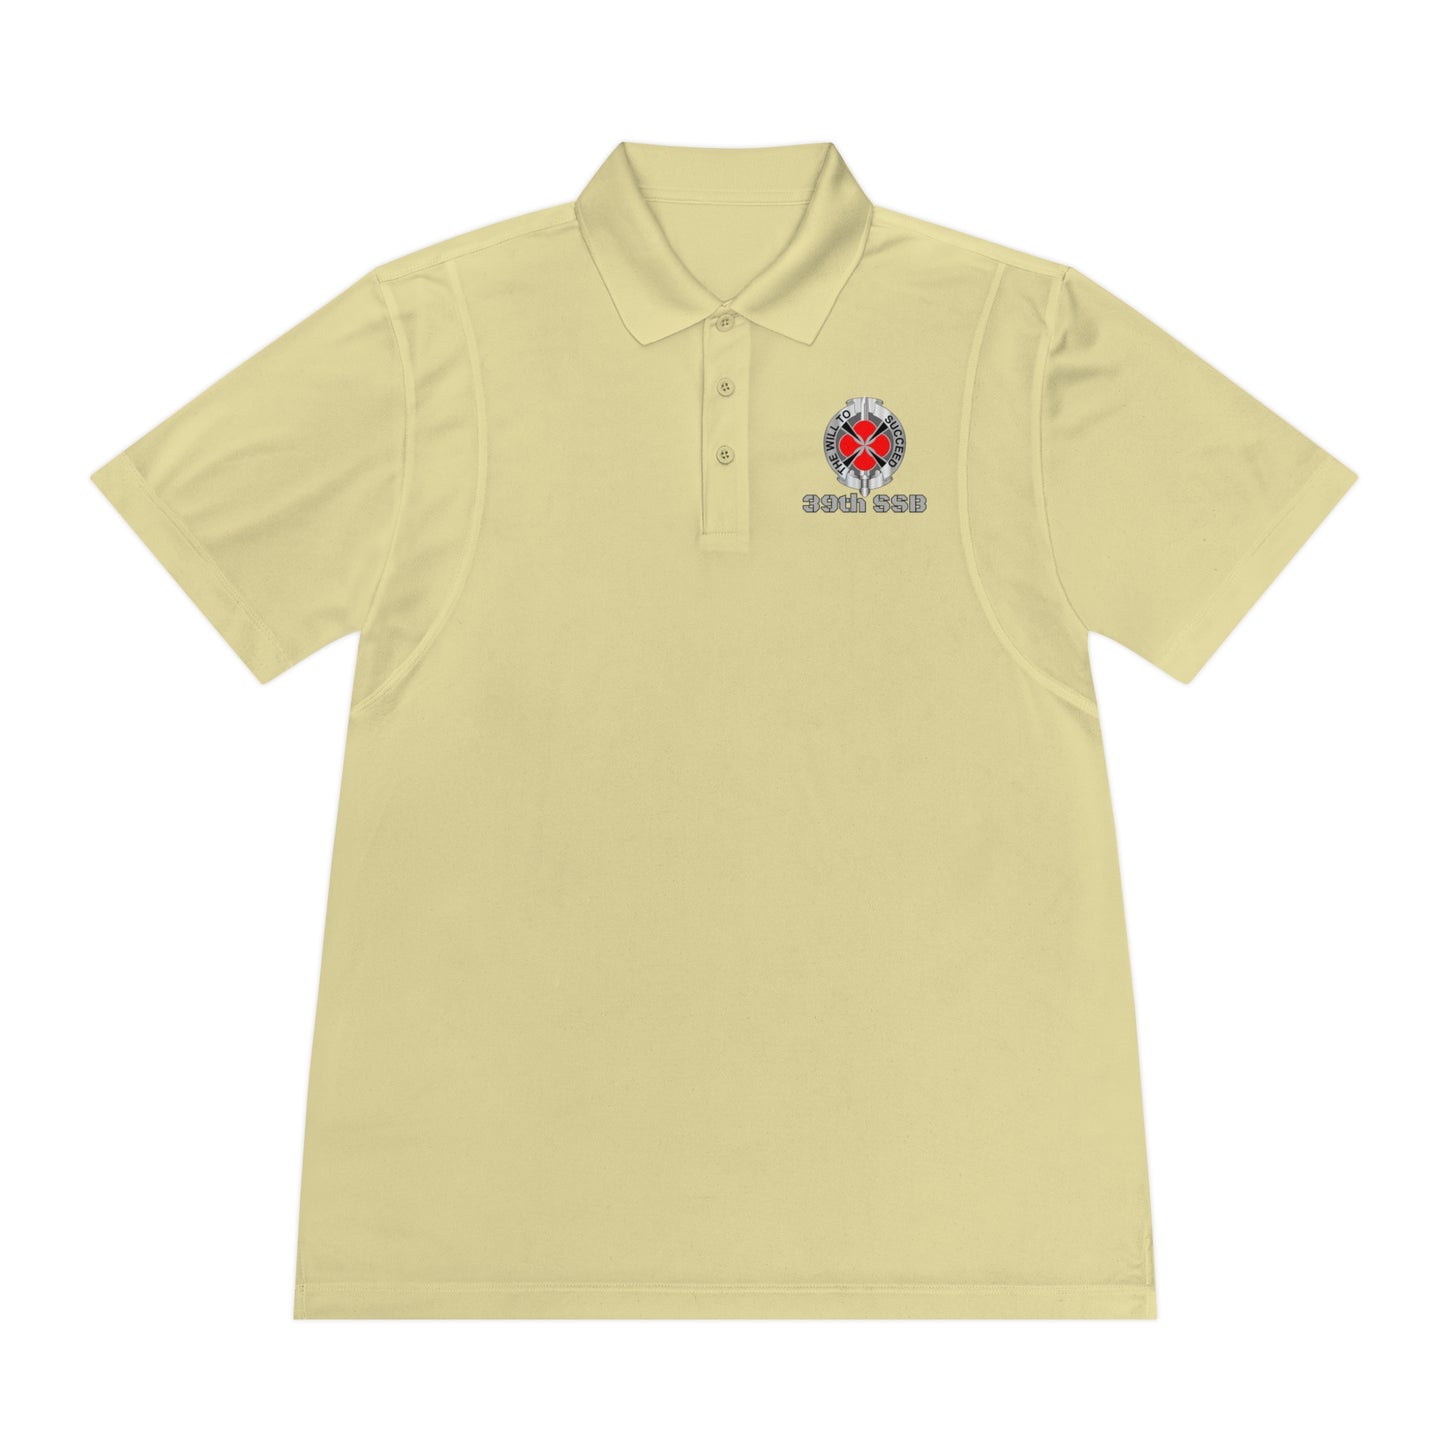 39th SSB Polo Shirt - Back is Blank